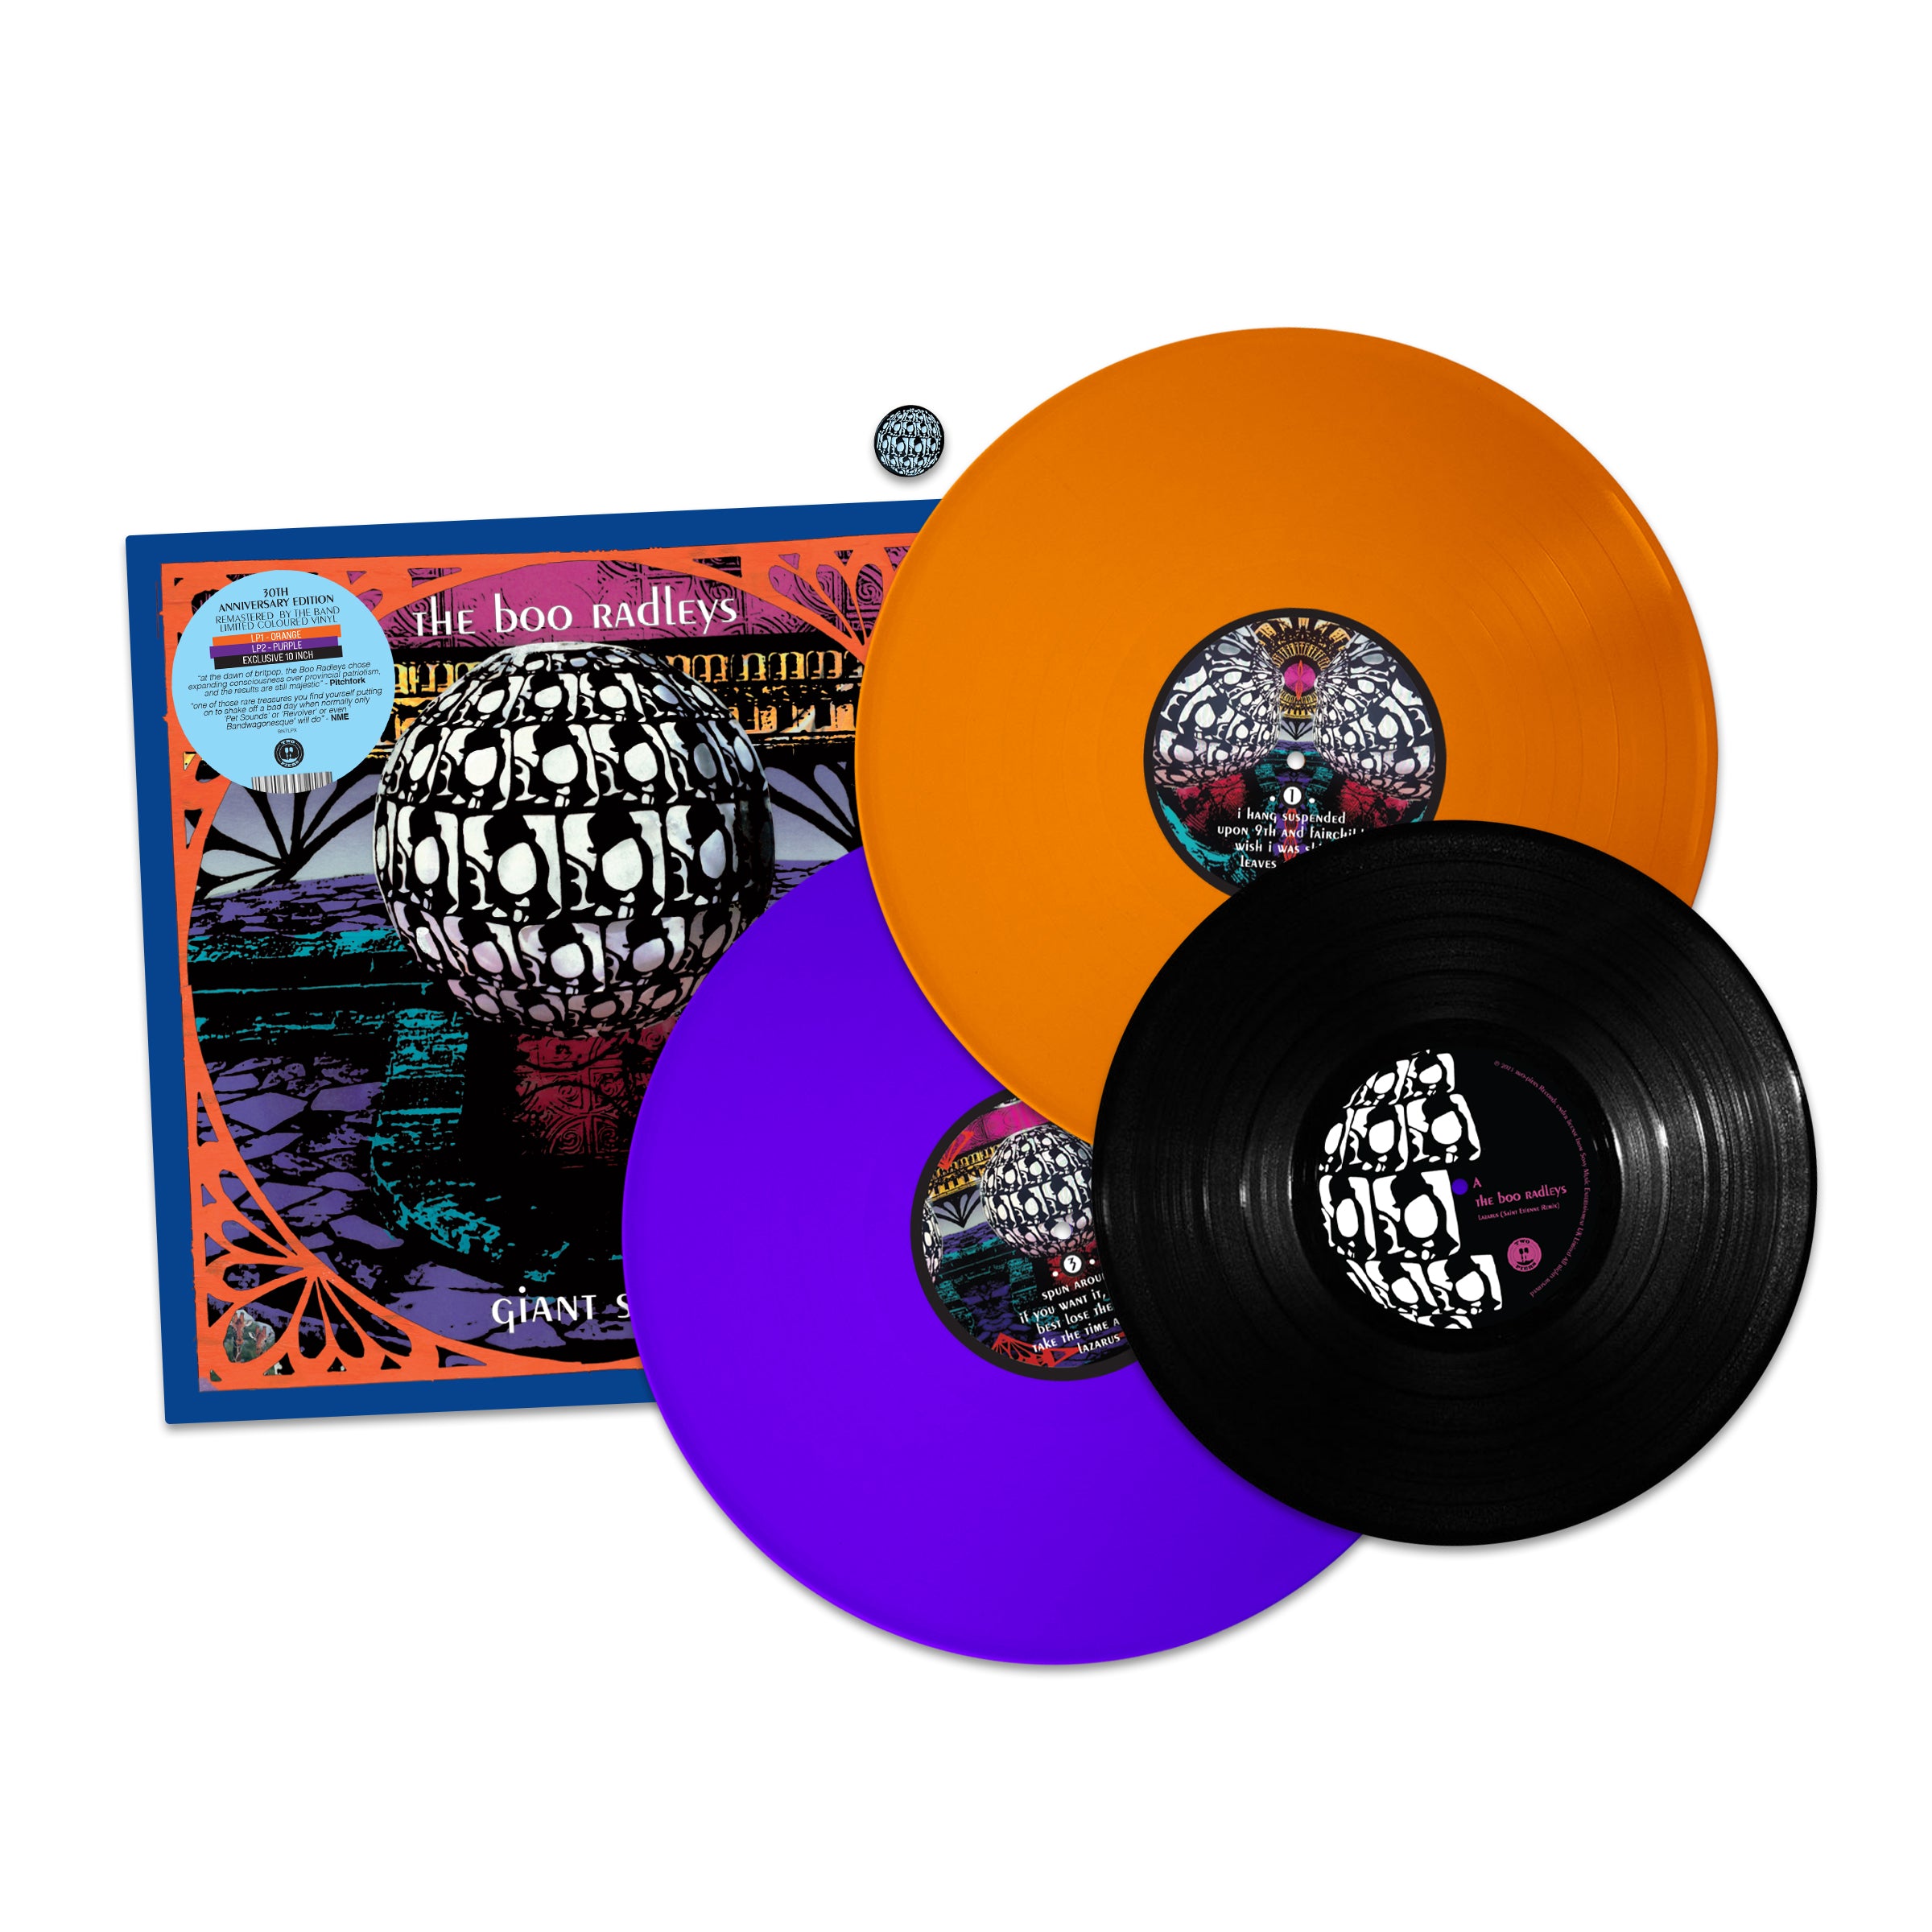 Giant Steps: 30th Anniversary Edition Orange & Purple 2LP & Black Vinyl 10"